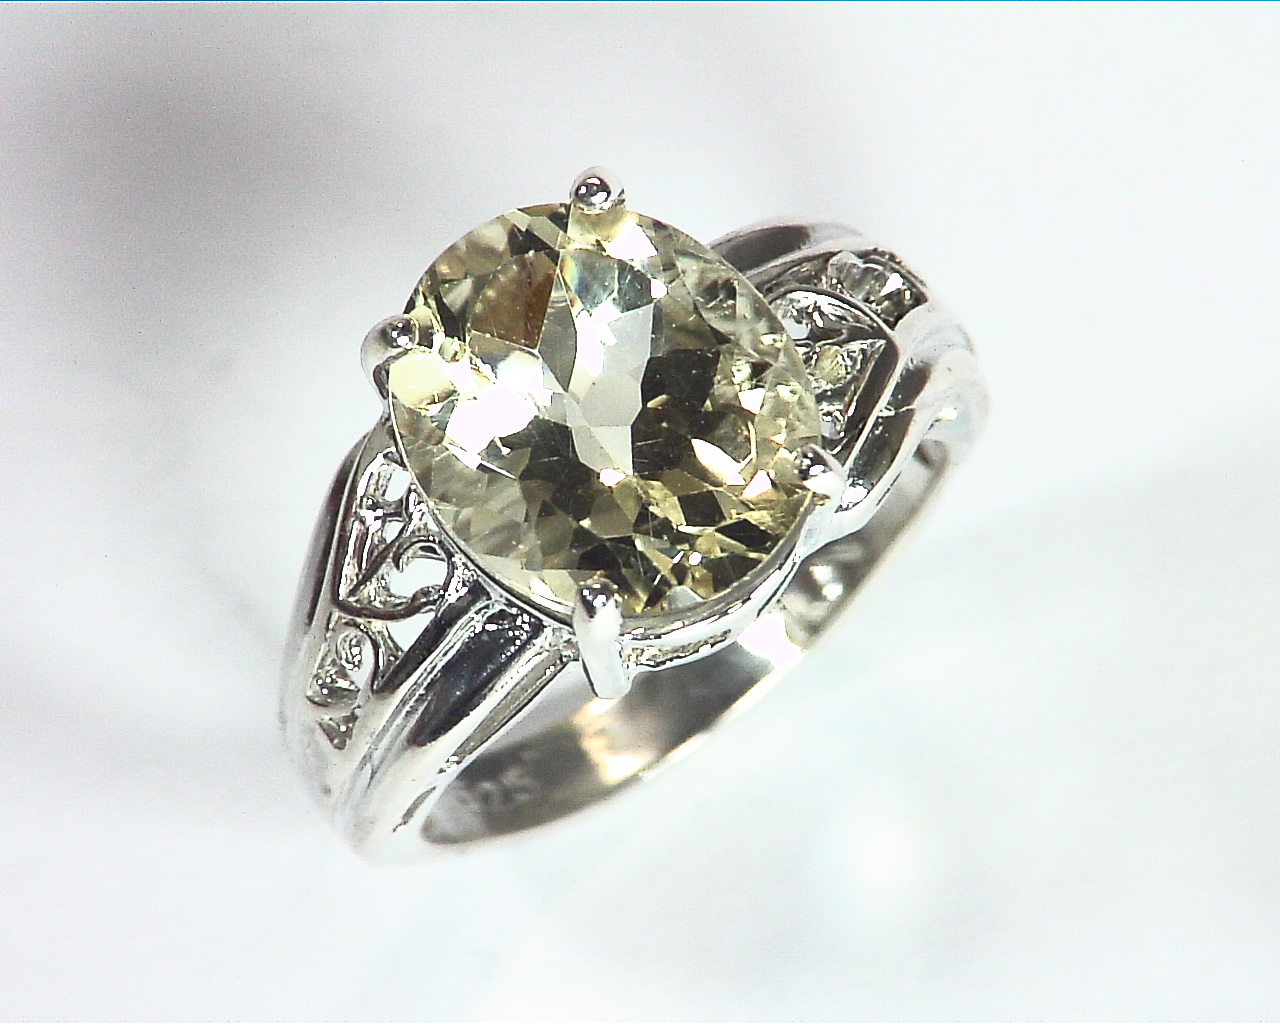 Labradorite Natural genuine gemstone set in Sterling Silver Ring,540 2